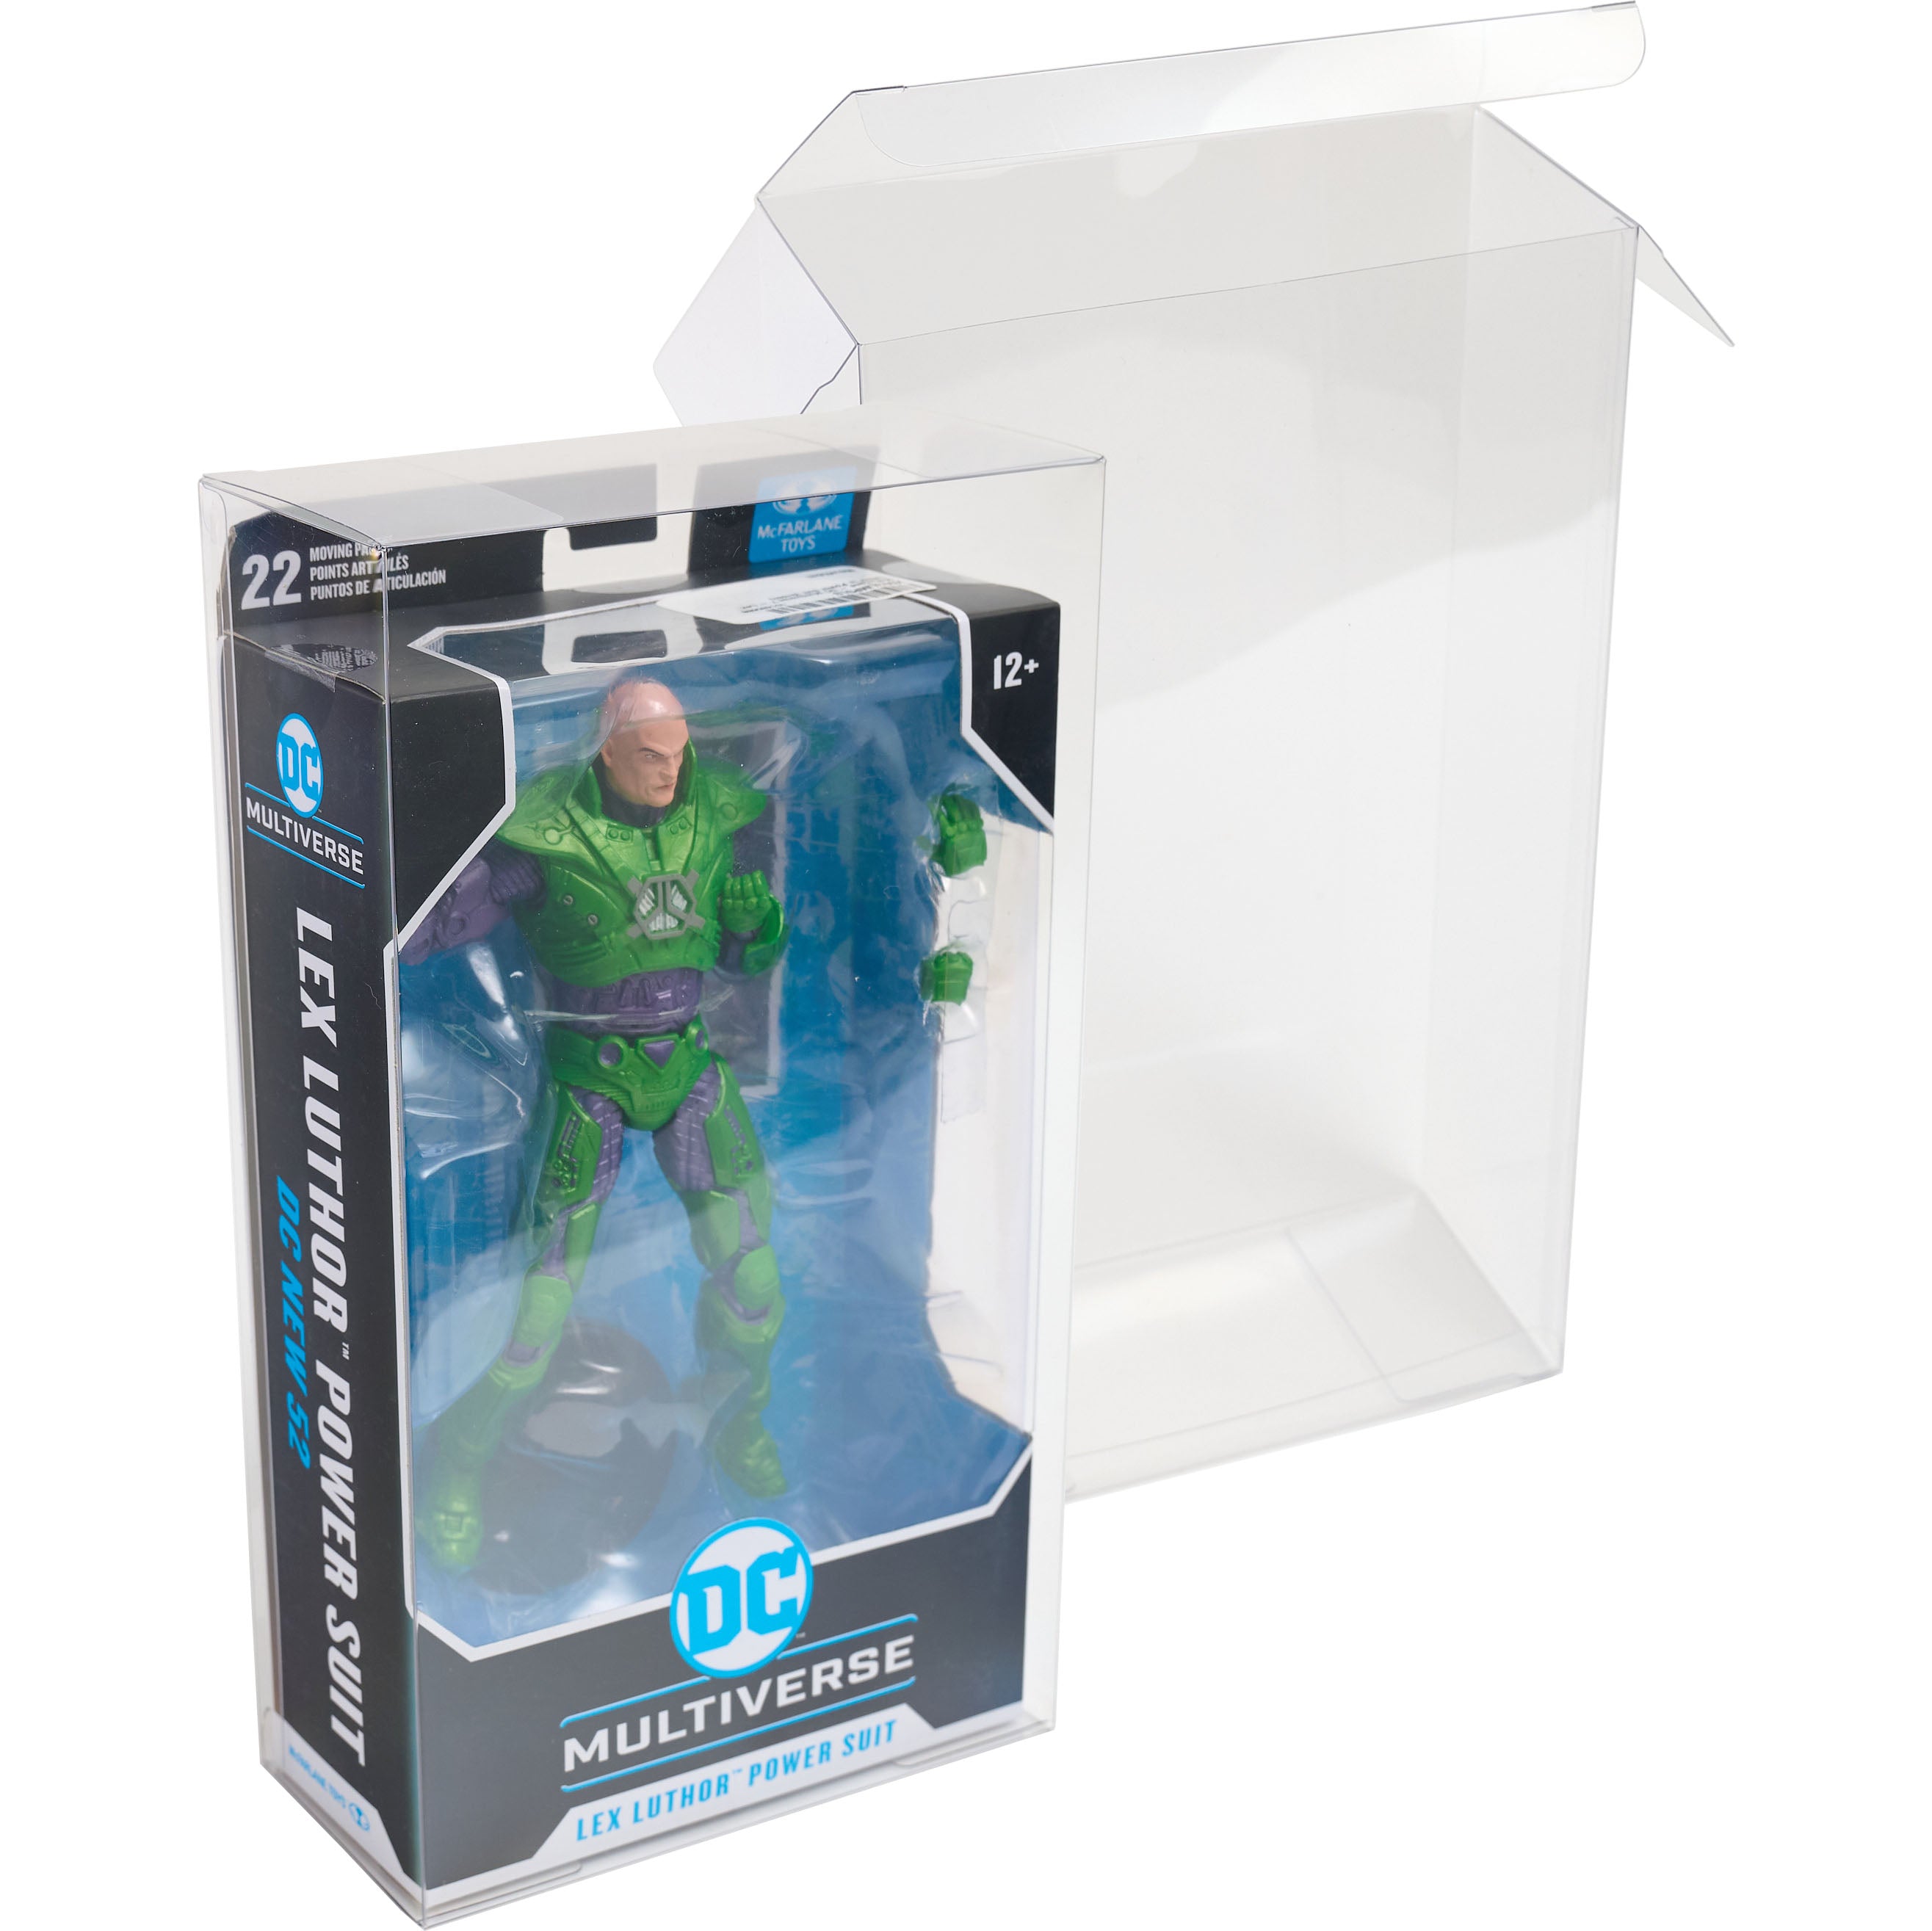 Platinum Protectors for McFarlane DC Multiverse 7" Action Figure Box